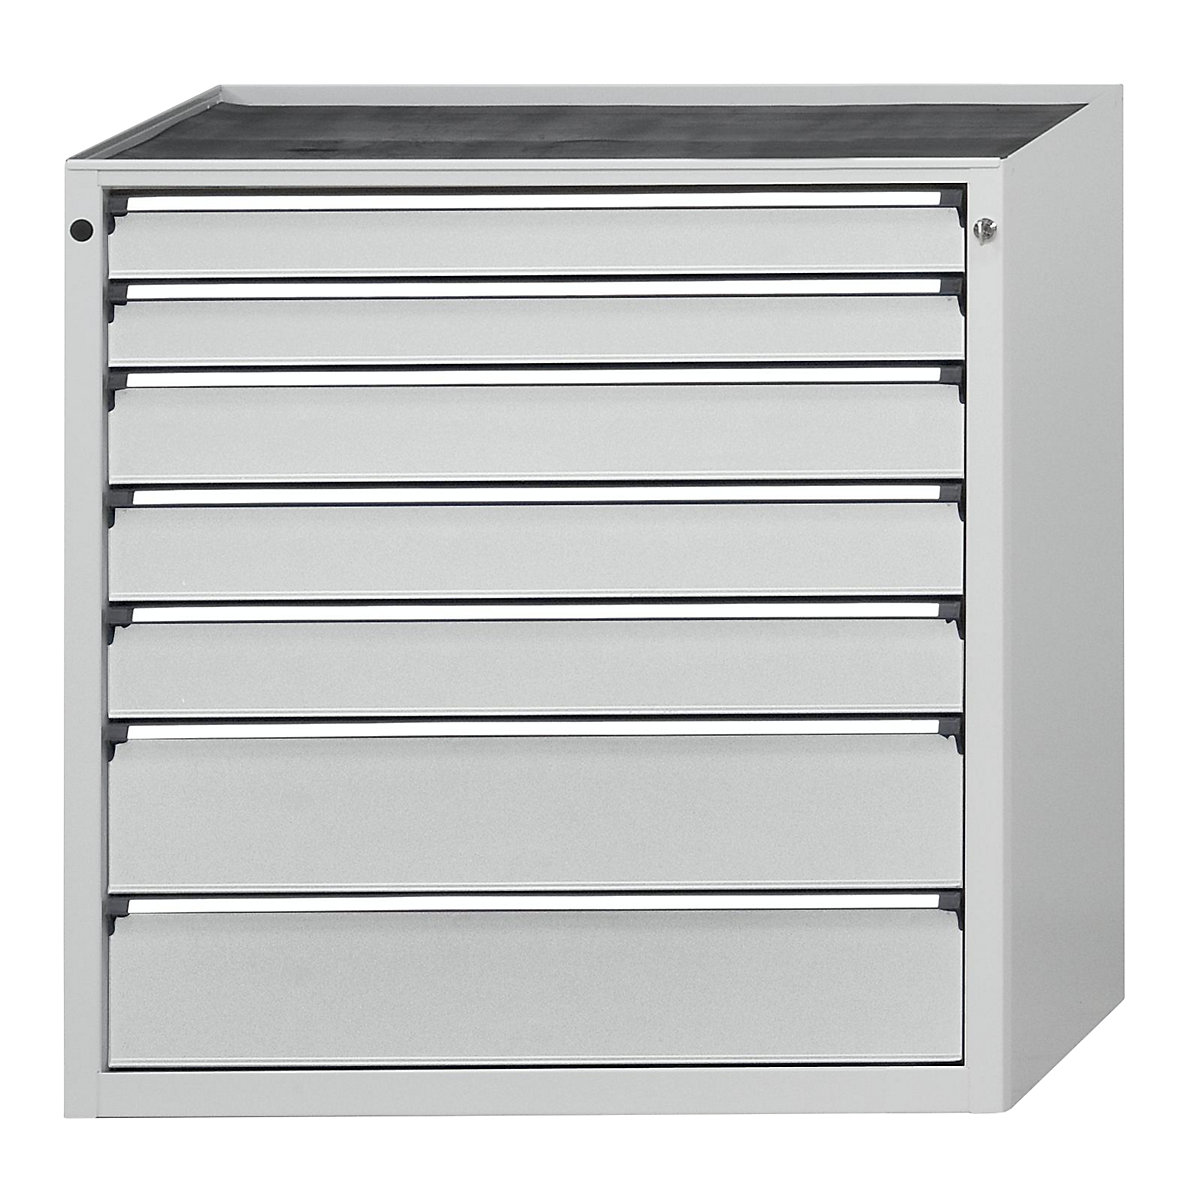 Dulap cu sertare – ANKE, lăț. x ad. 910 x 675 mm, 7 sertare, înălțime 980 mm, front gri deschis-15